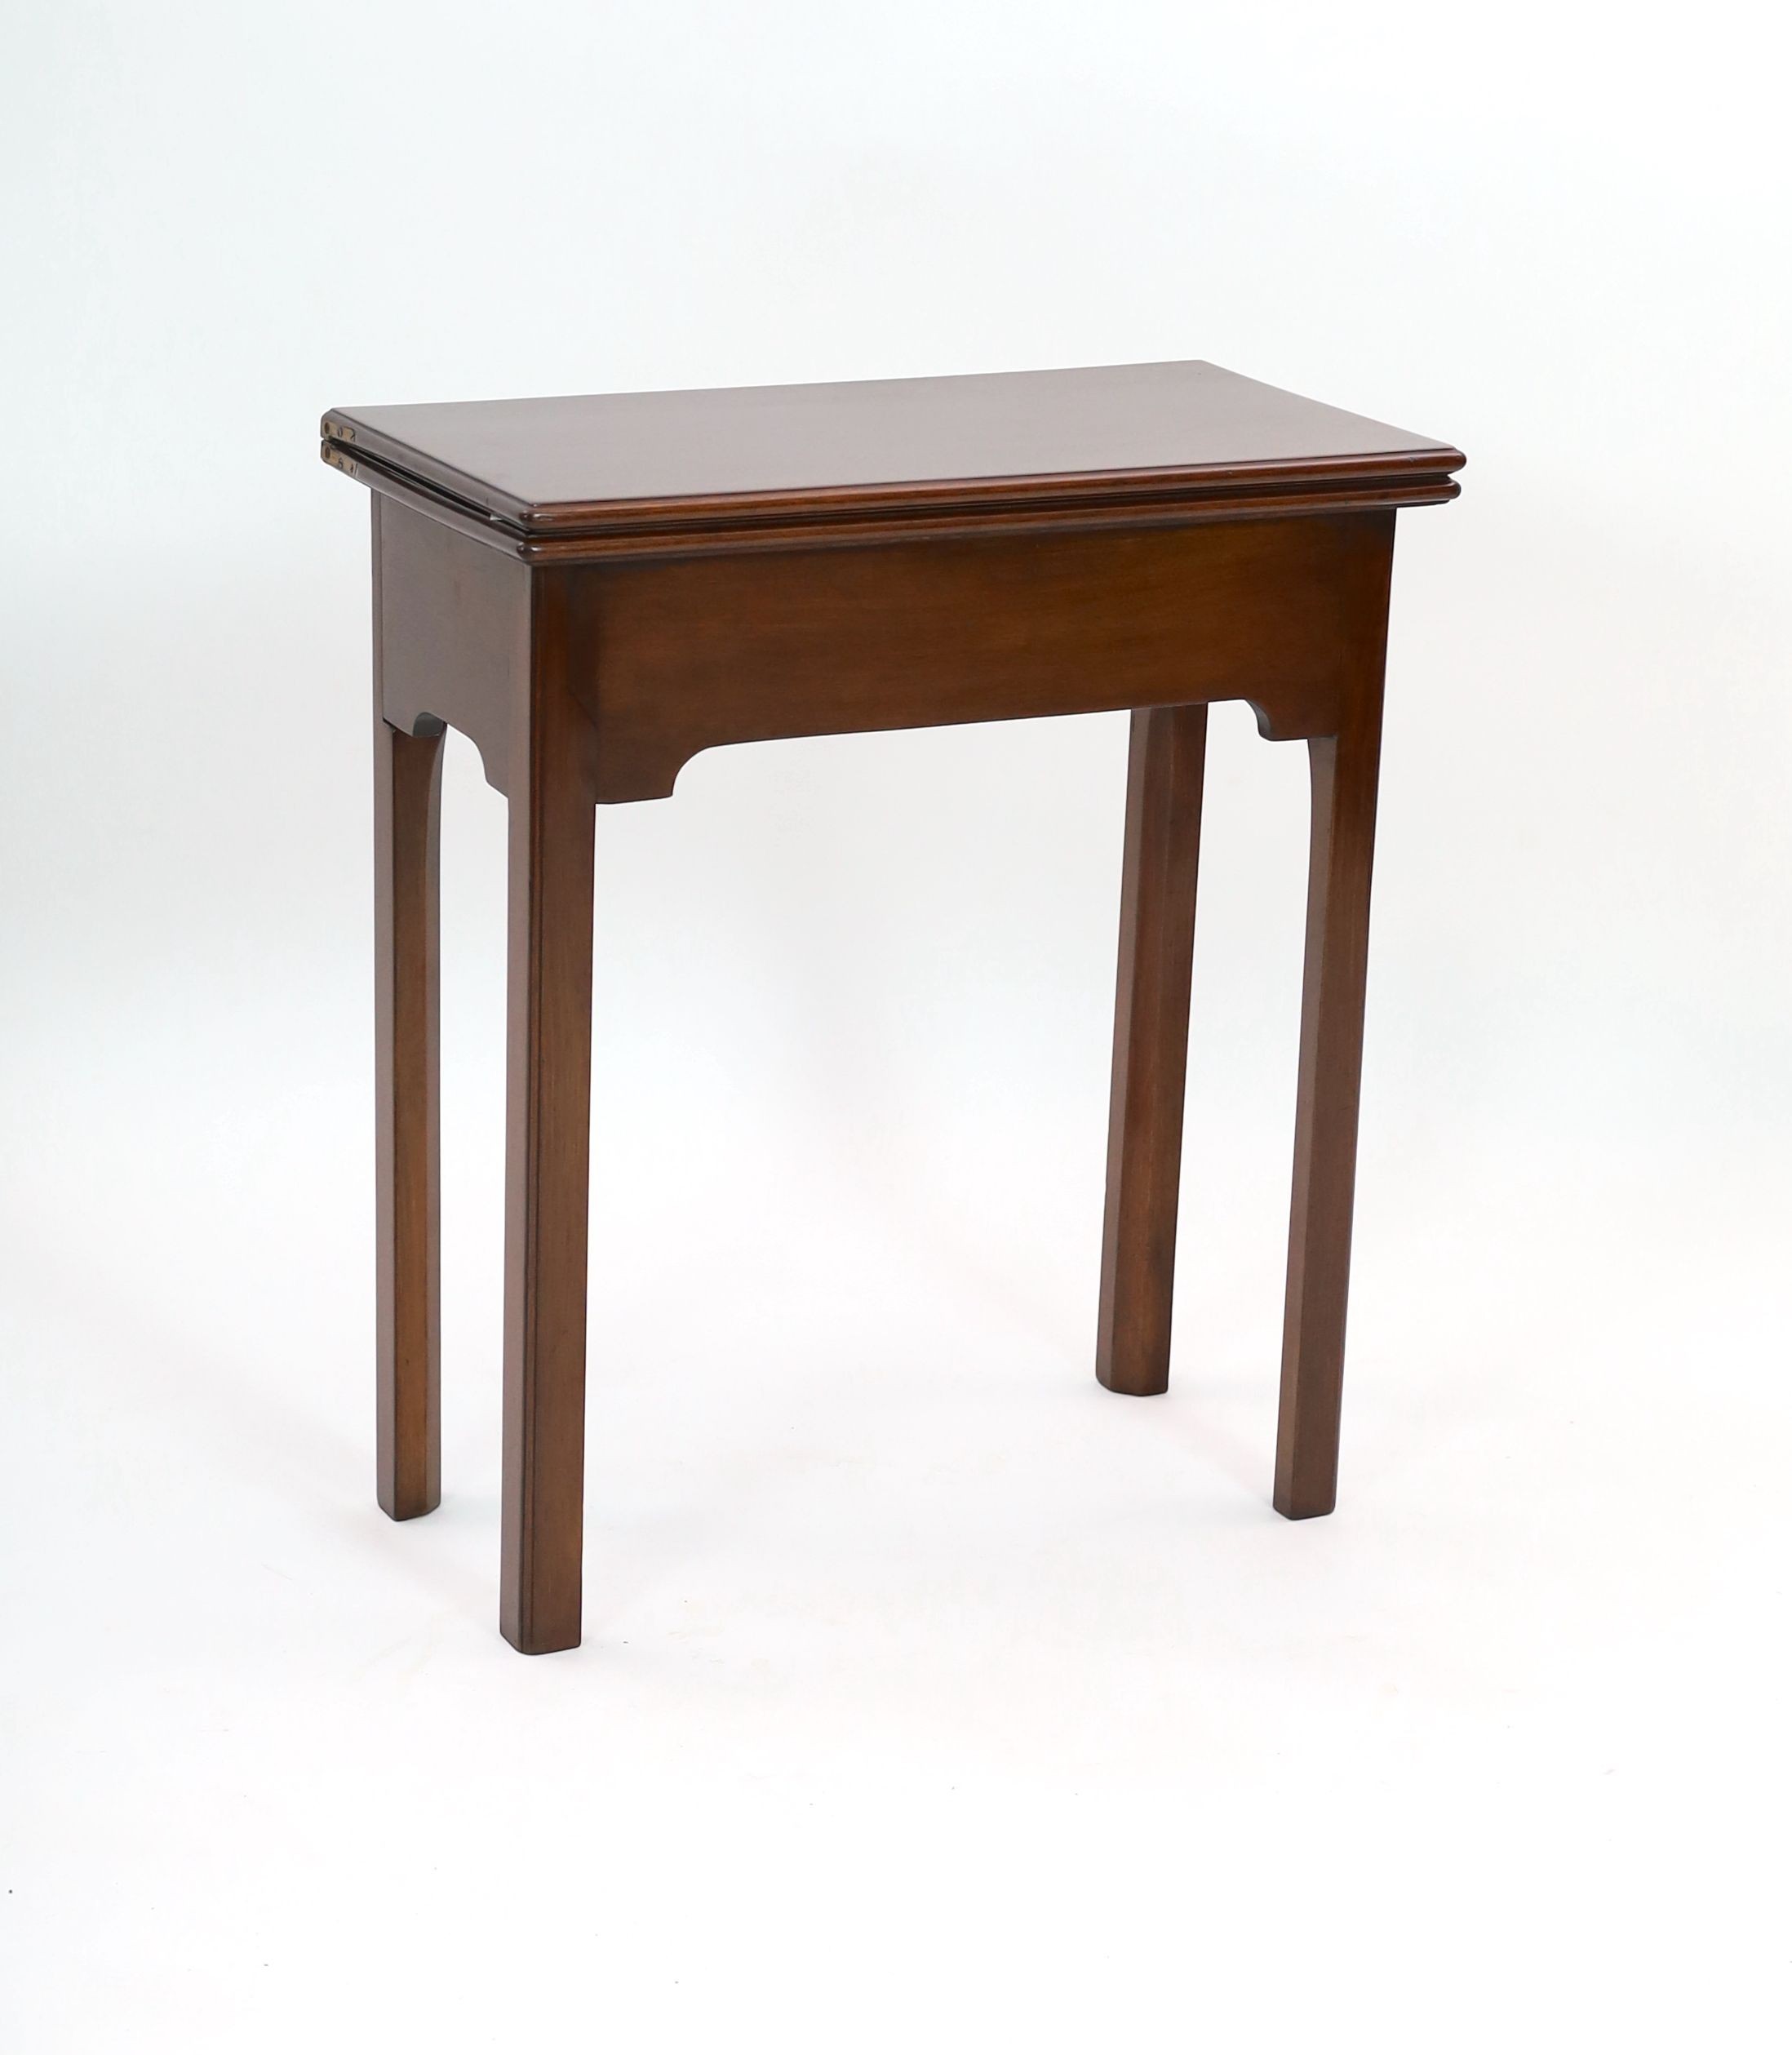 A reproduction George III style rectangular mahogany folding tea table, width 63cm depth 32cm height 73cm